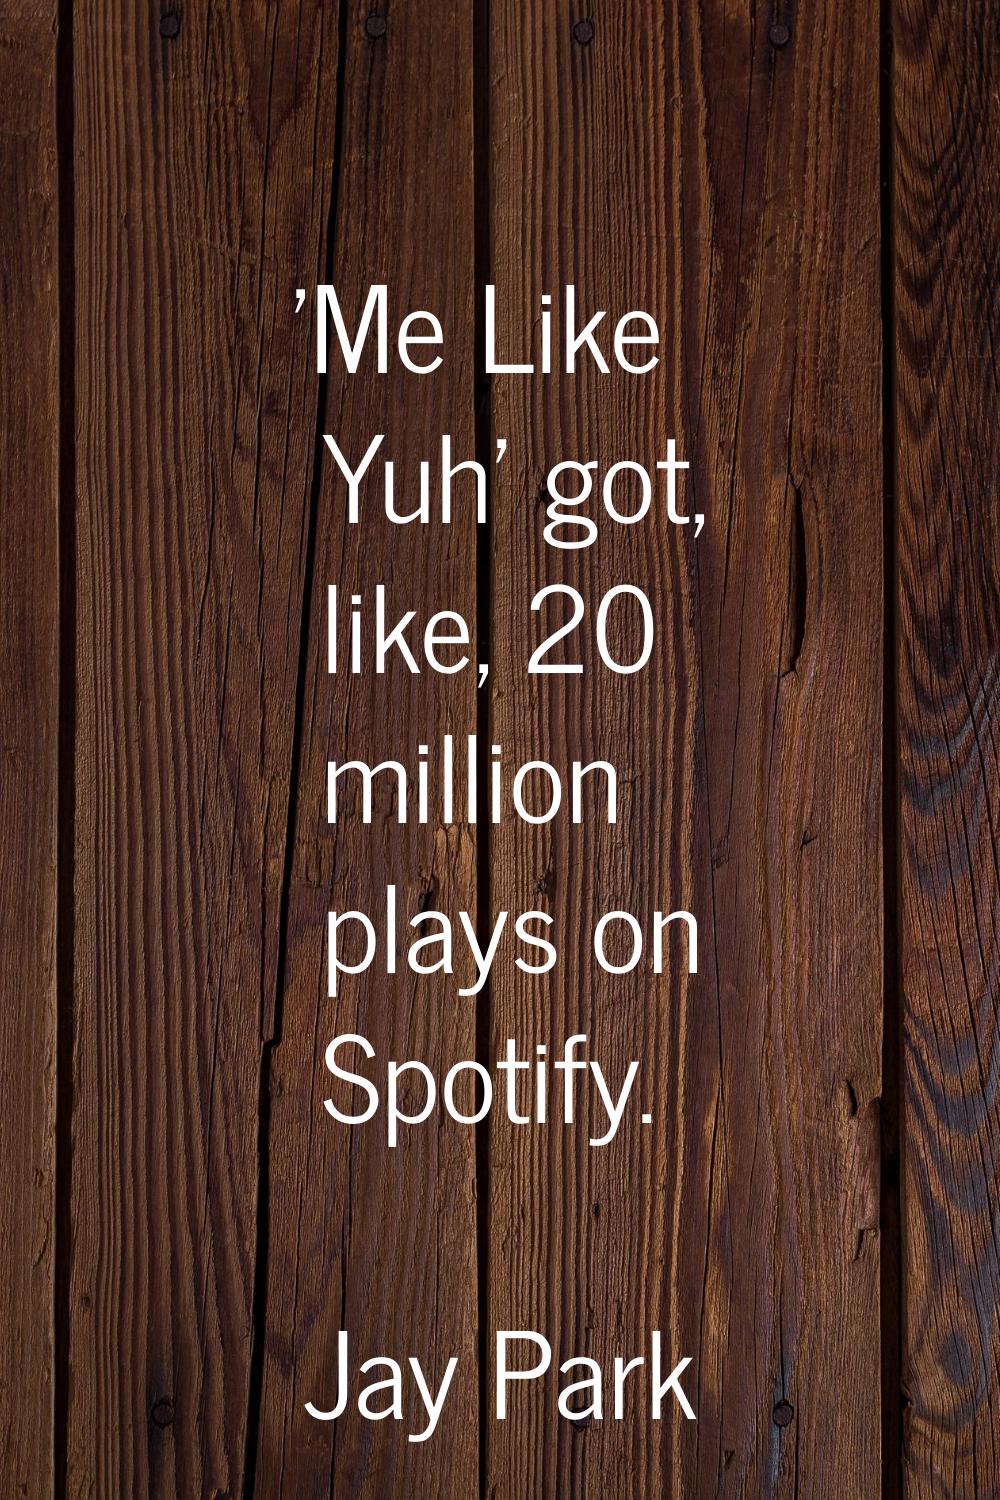 'Me Like Yuh' got, like, 20 million plays on Spotify.